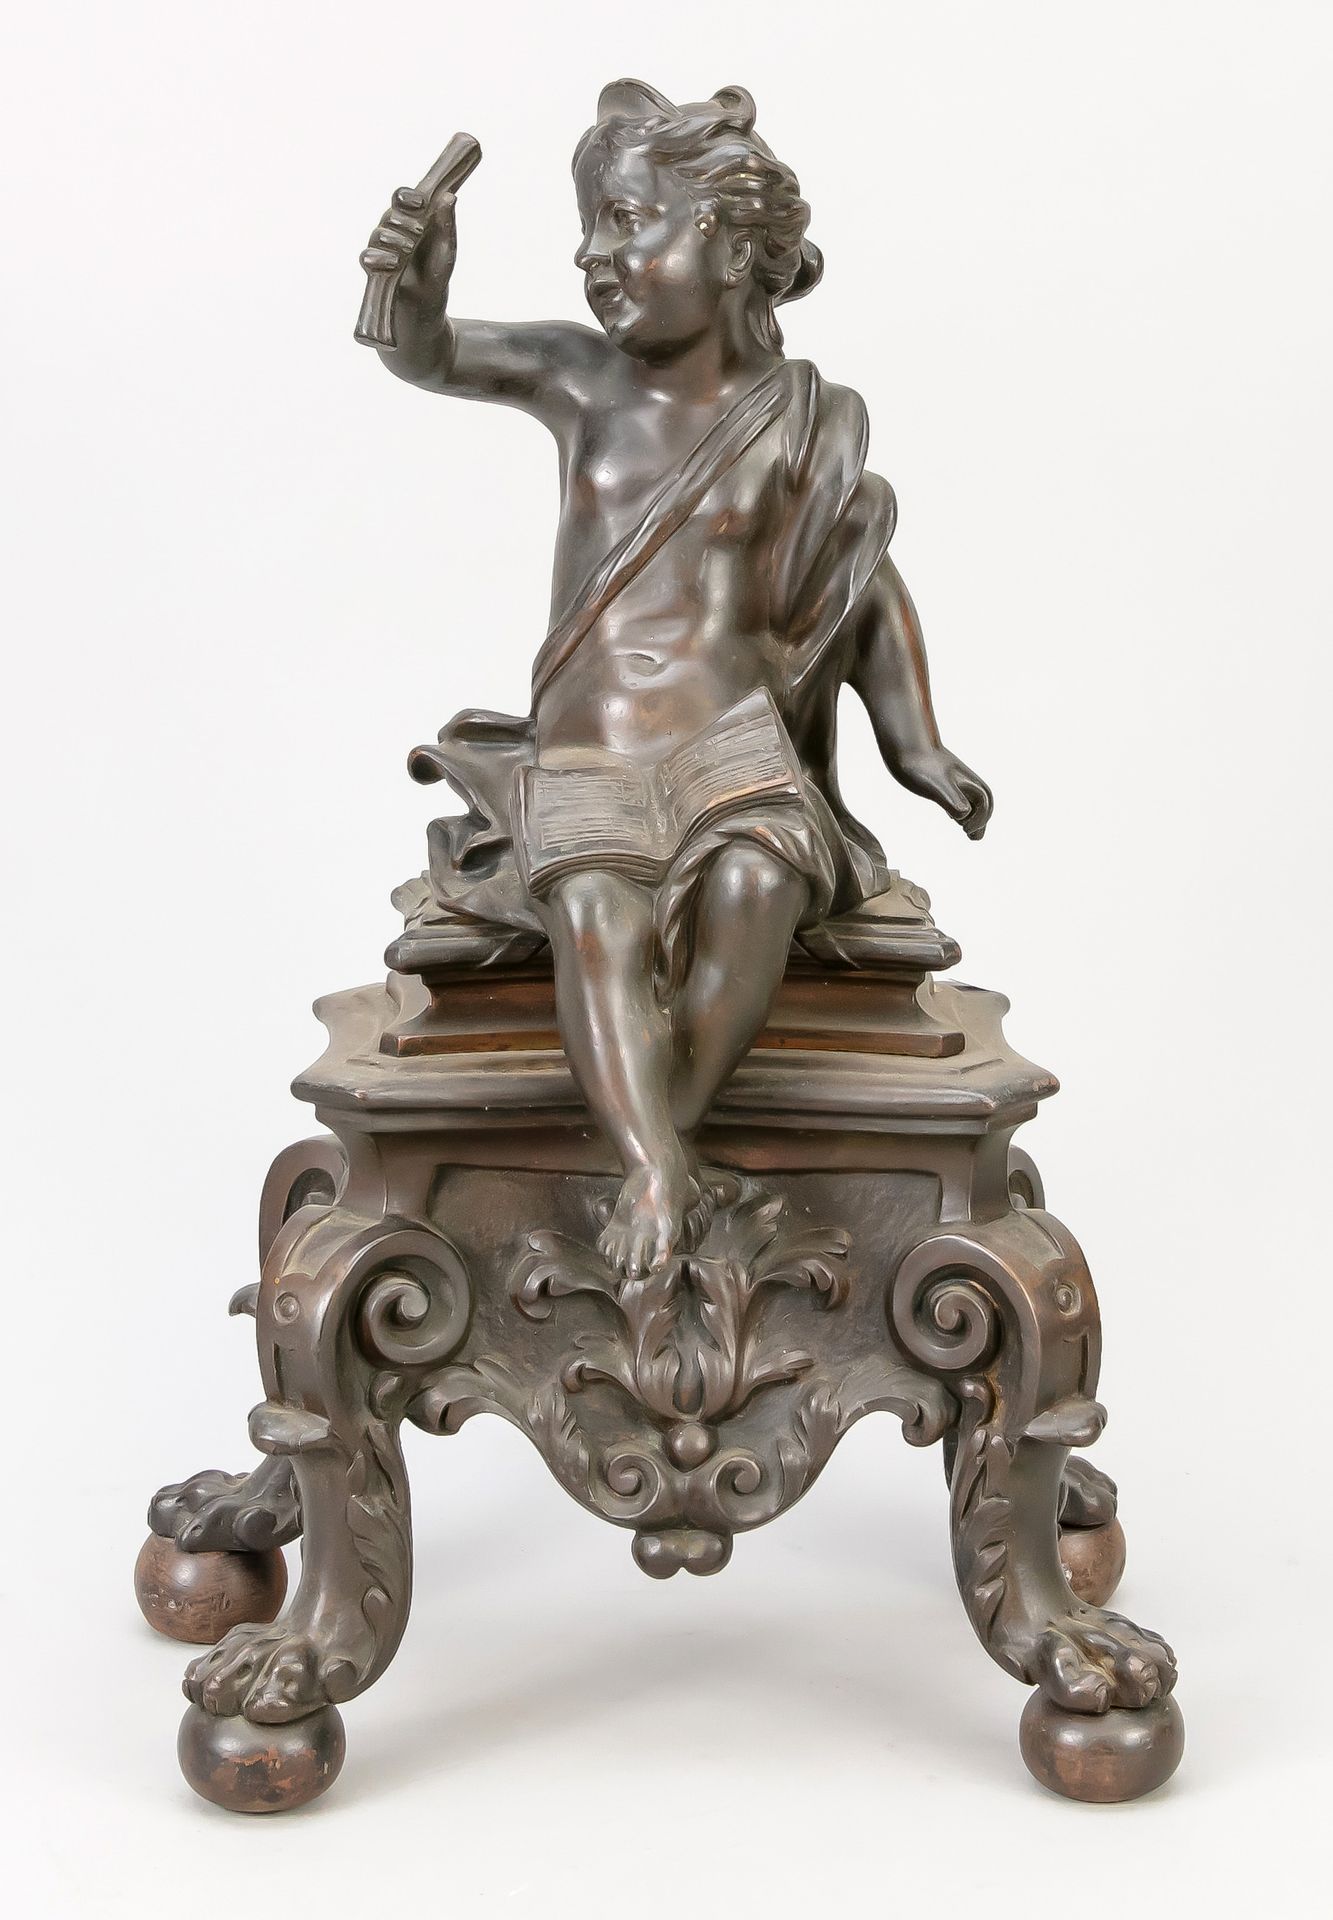 Null 19世纪的匿名雕塑家，一个拿着音乐书的女孩的寓言人物，坐在一个有爪子的基座上，深色的青铜，没有签名，高41厘米